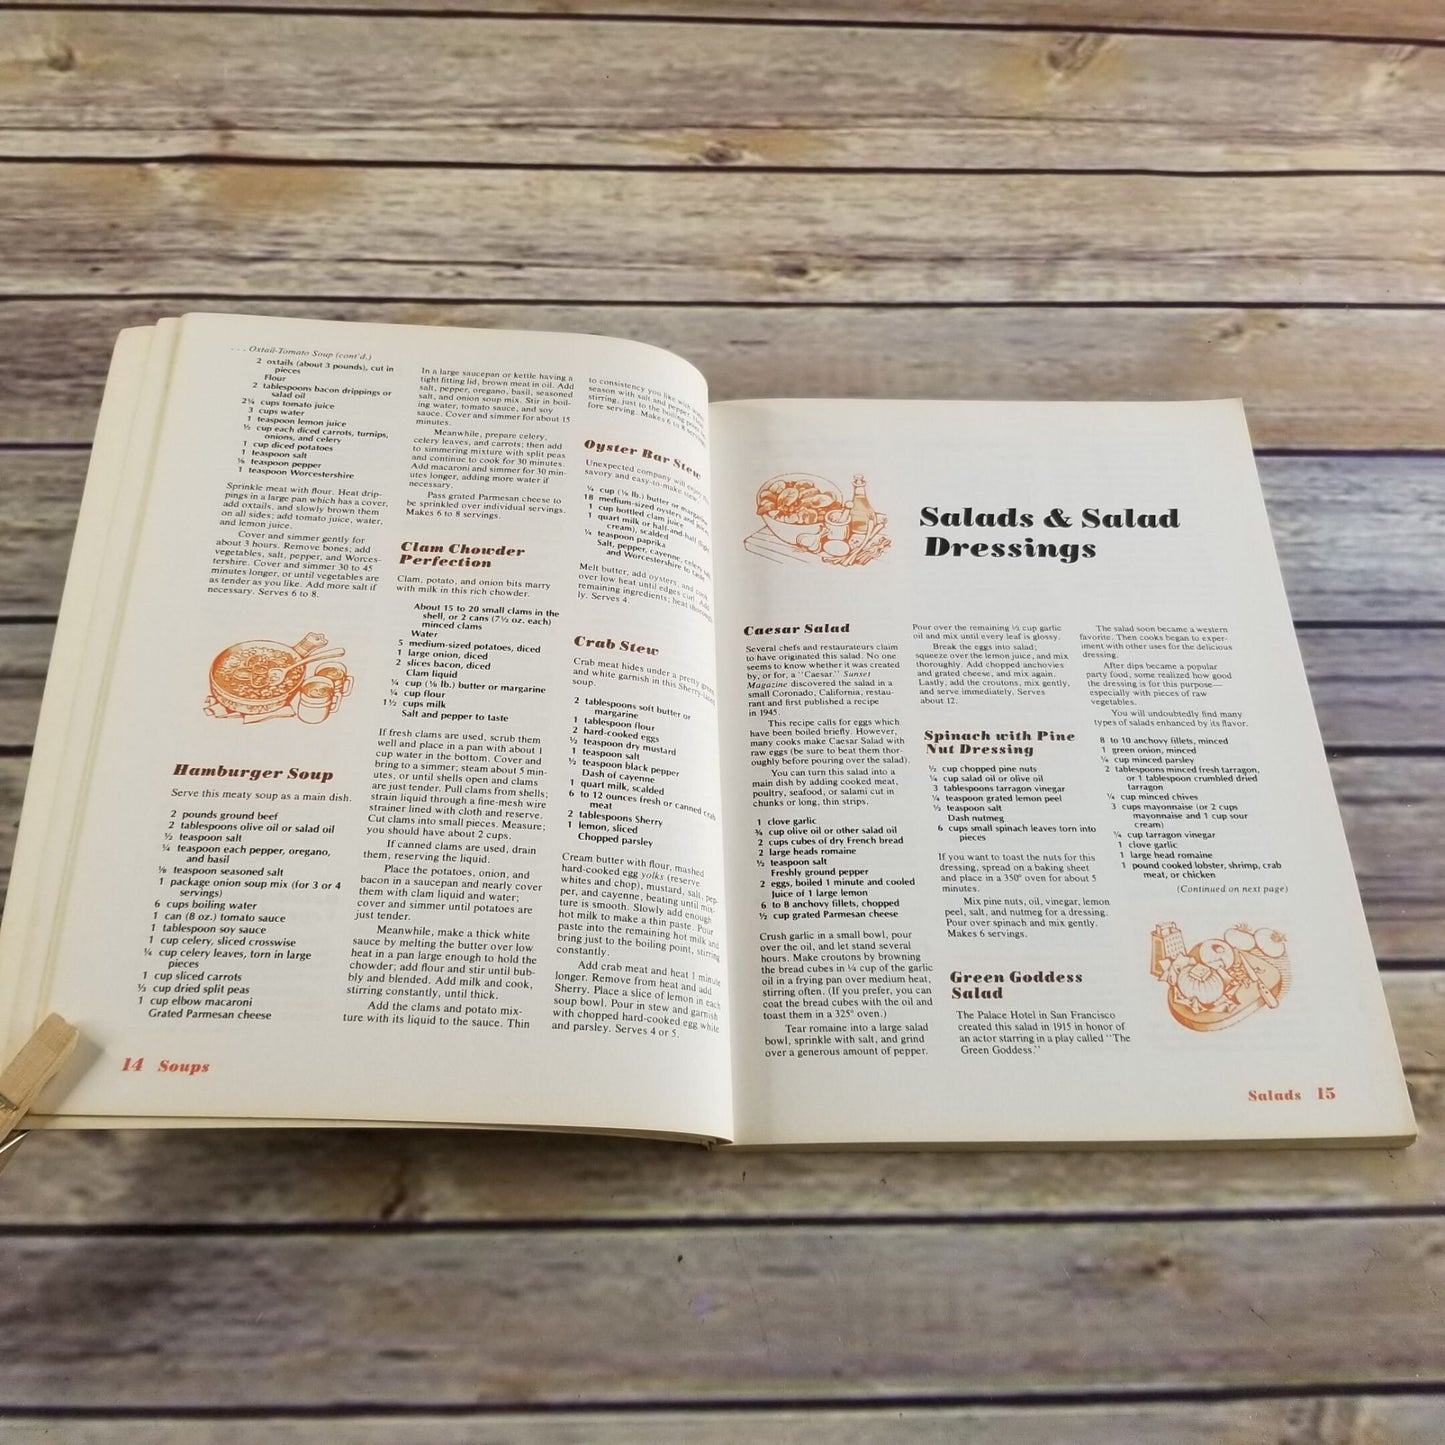 Vintage Cookbook Sunset Favorite Recipes #1 1982 Paperback Book Appetizers Soups Salads Main Dishes Vegetables Breads Pancakes Desserts